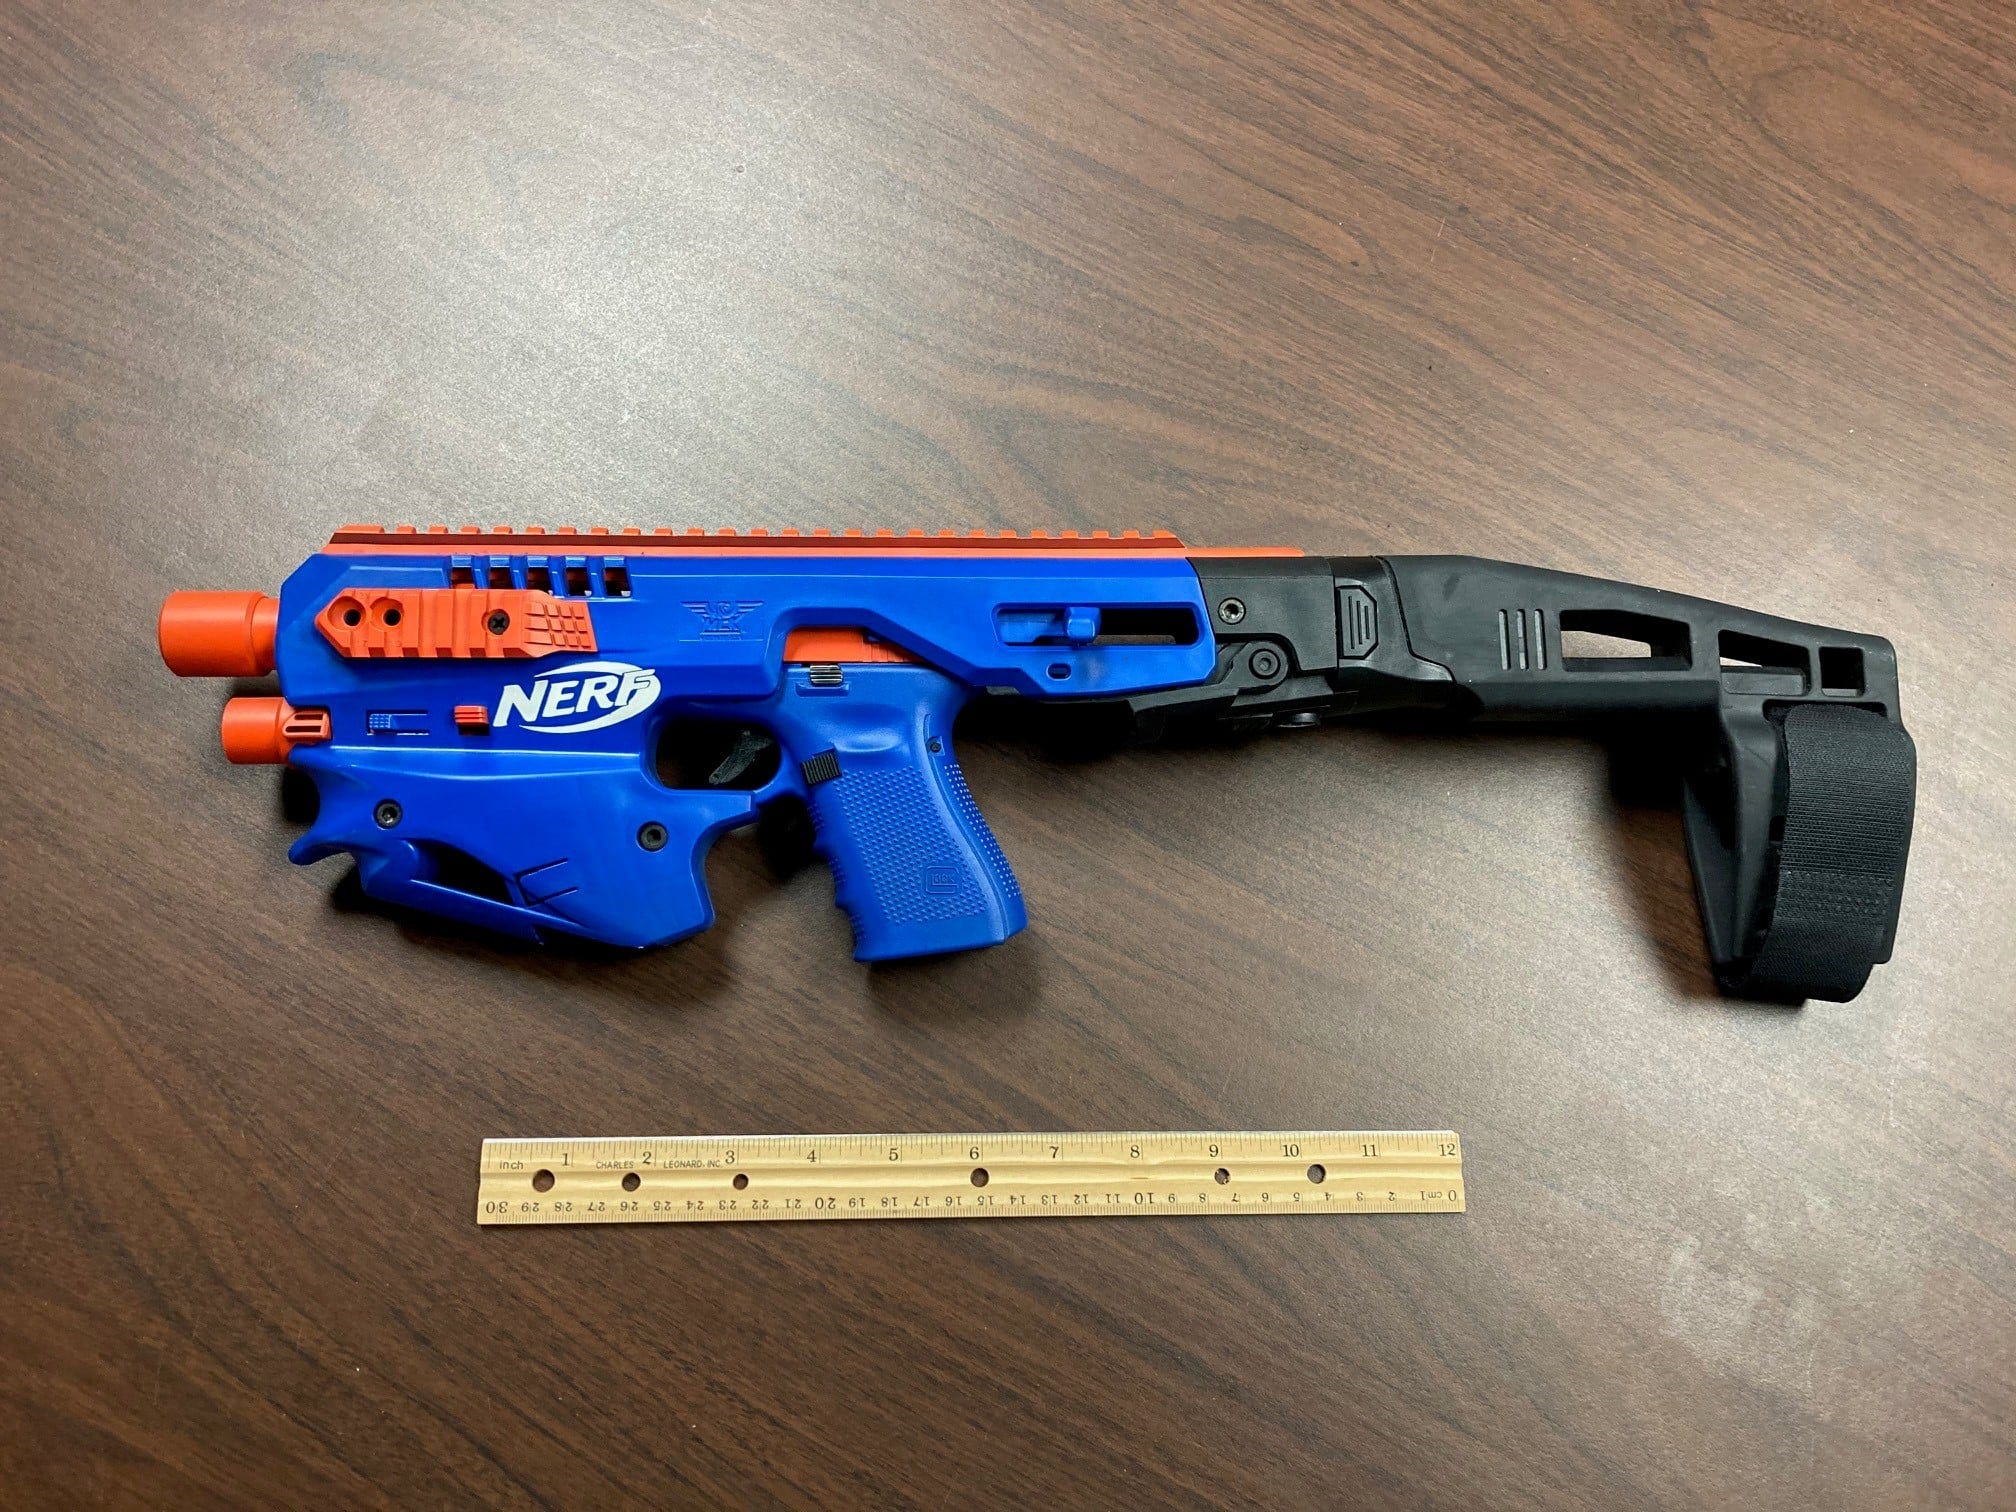 Nerf gun: pistol disguised as toy seized in North Carolina raid